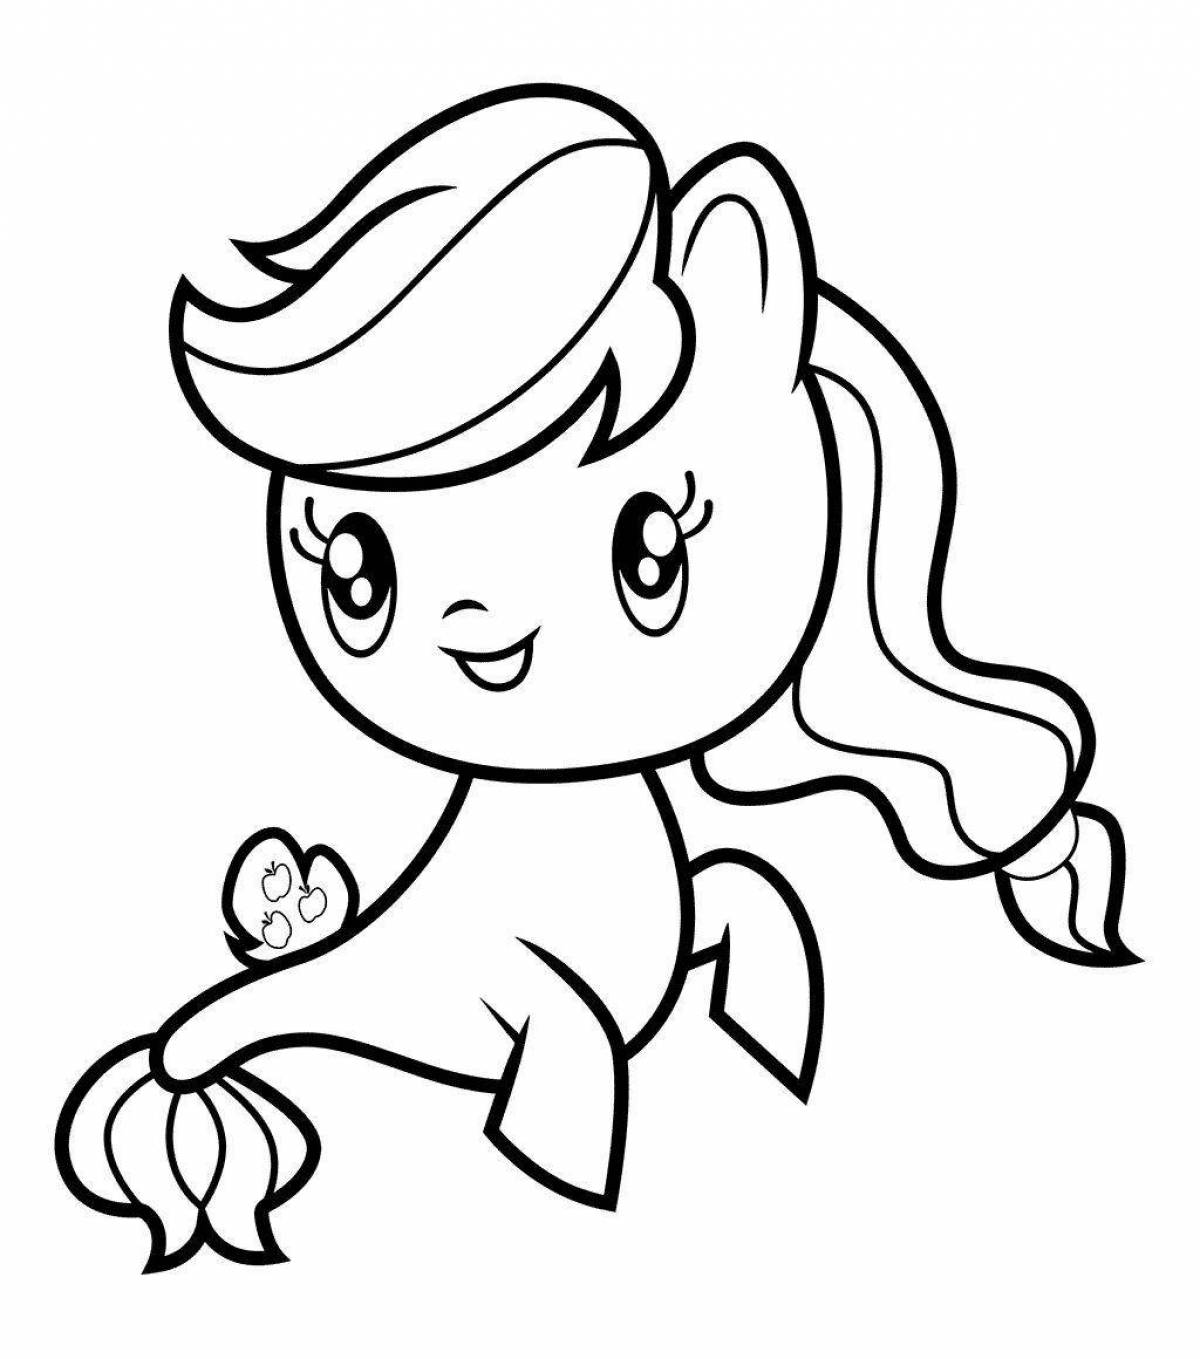 Coloring page joyful mini pony